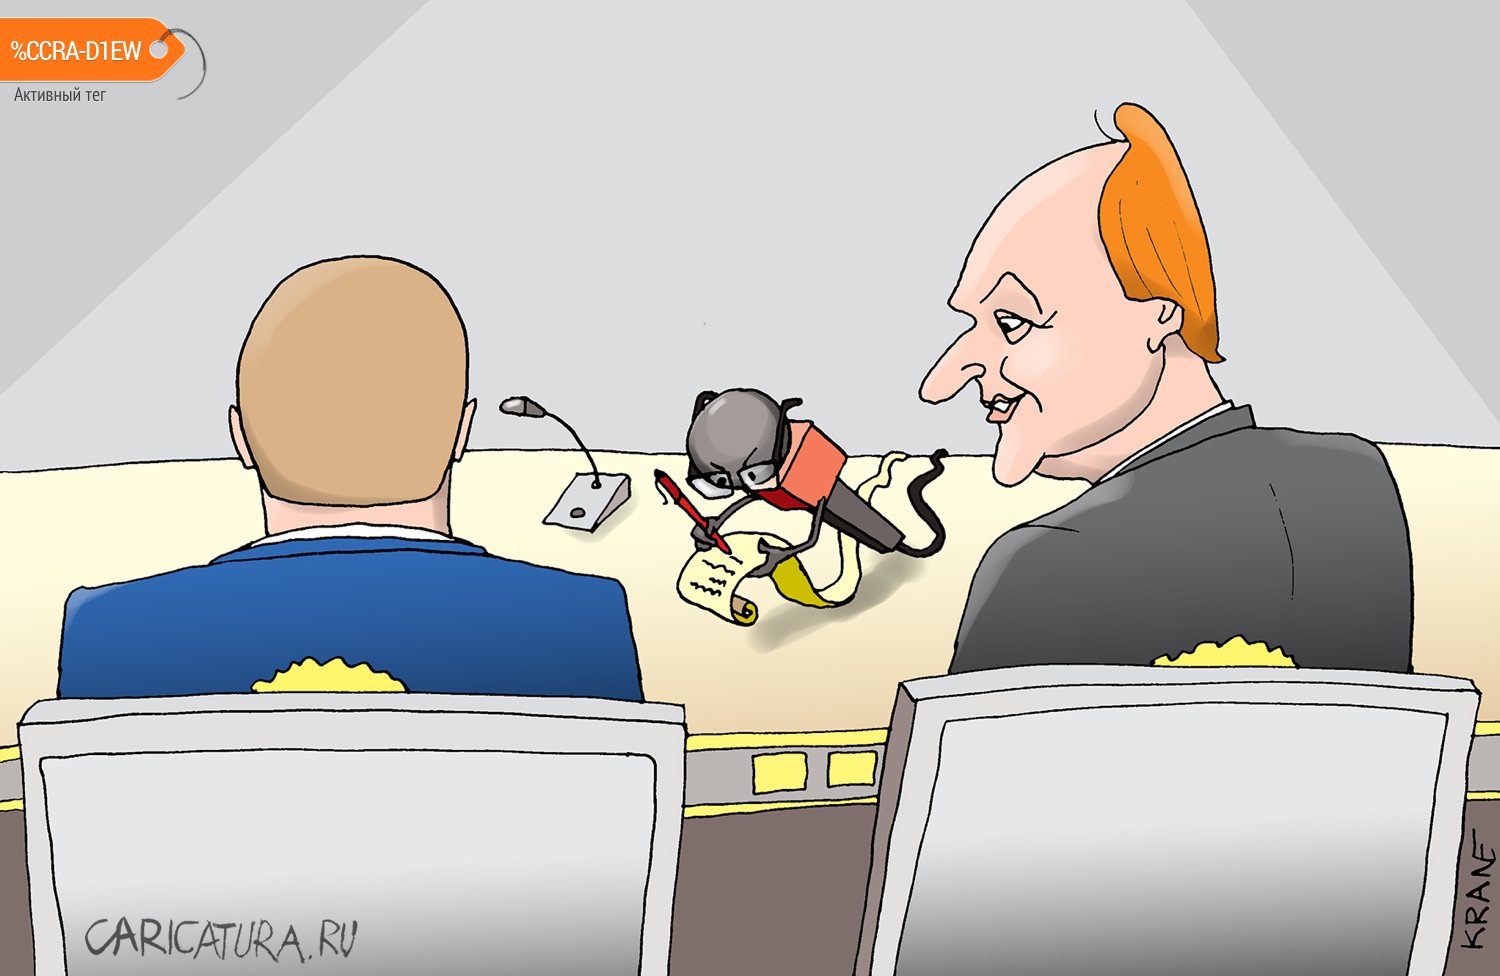 Карикатура "Ждем Единый корпус словарей и грамматики", Евгений Кран